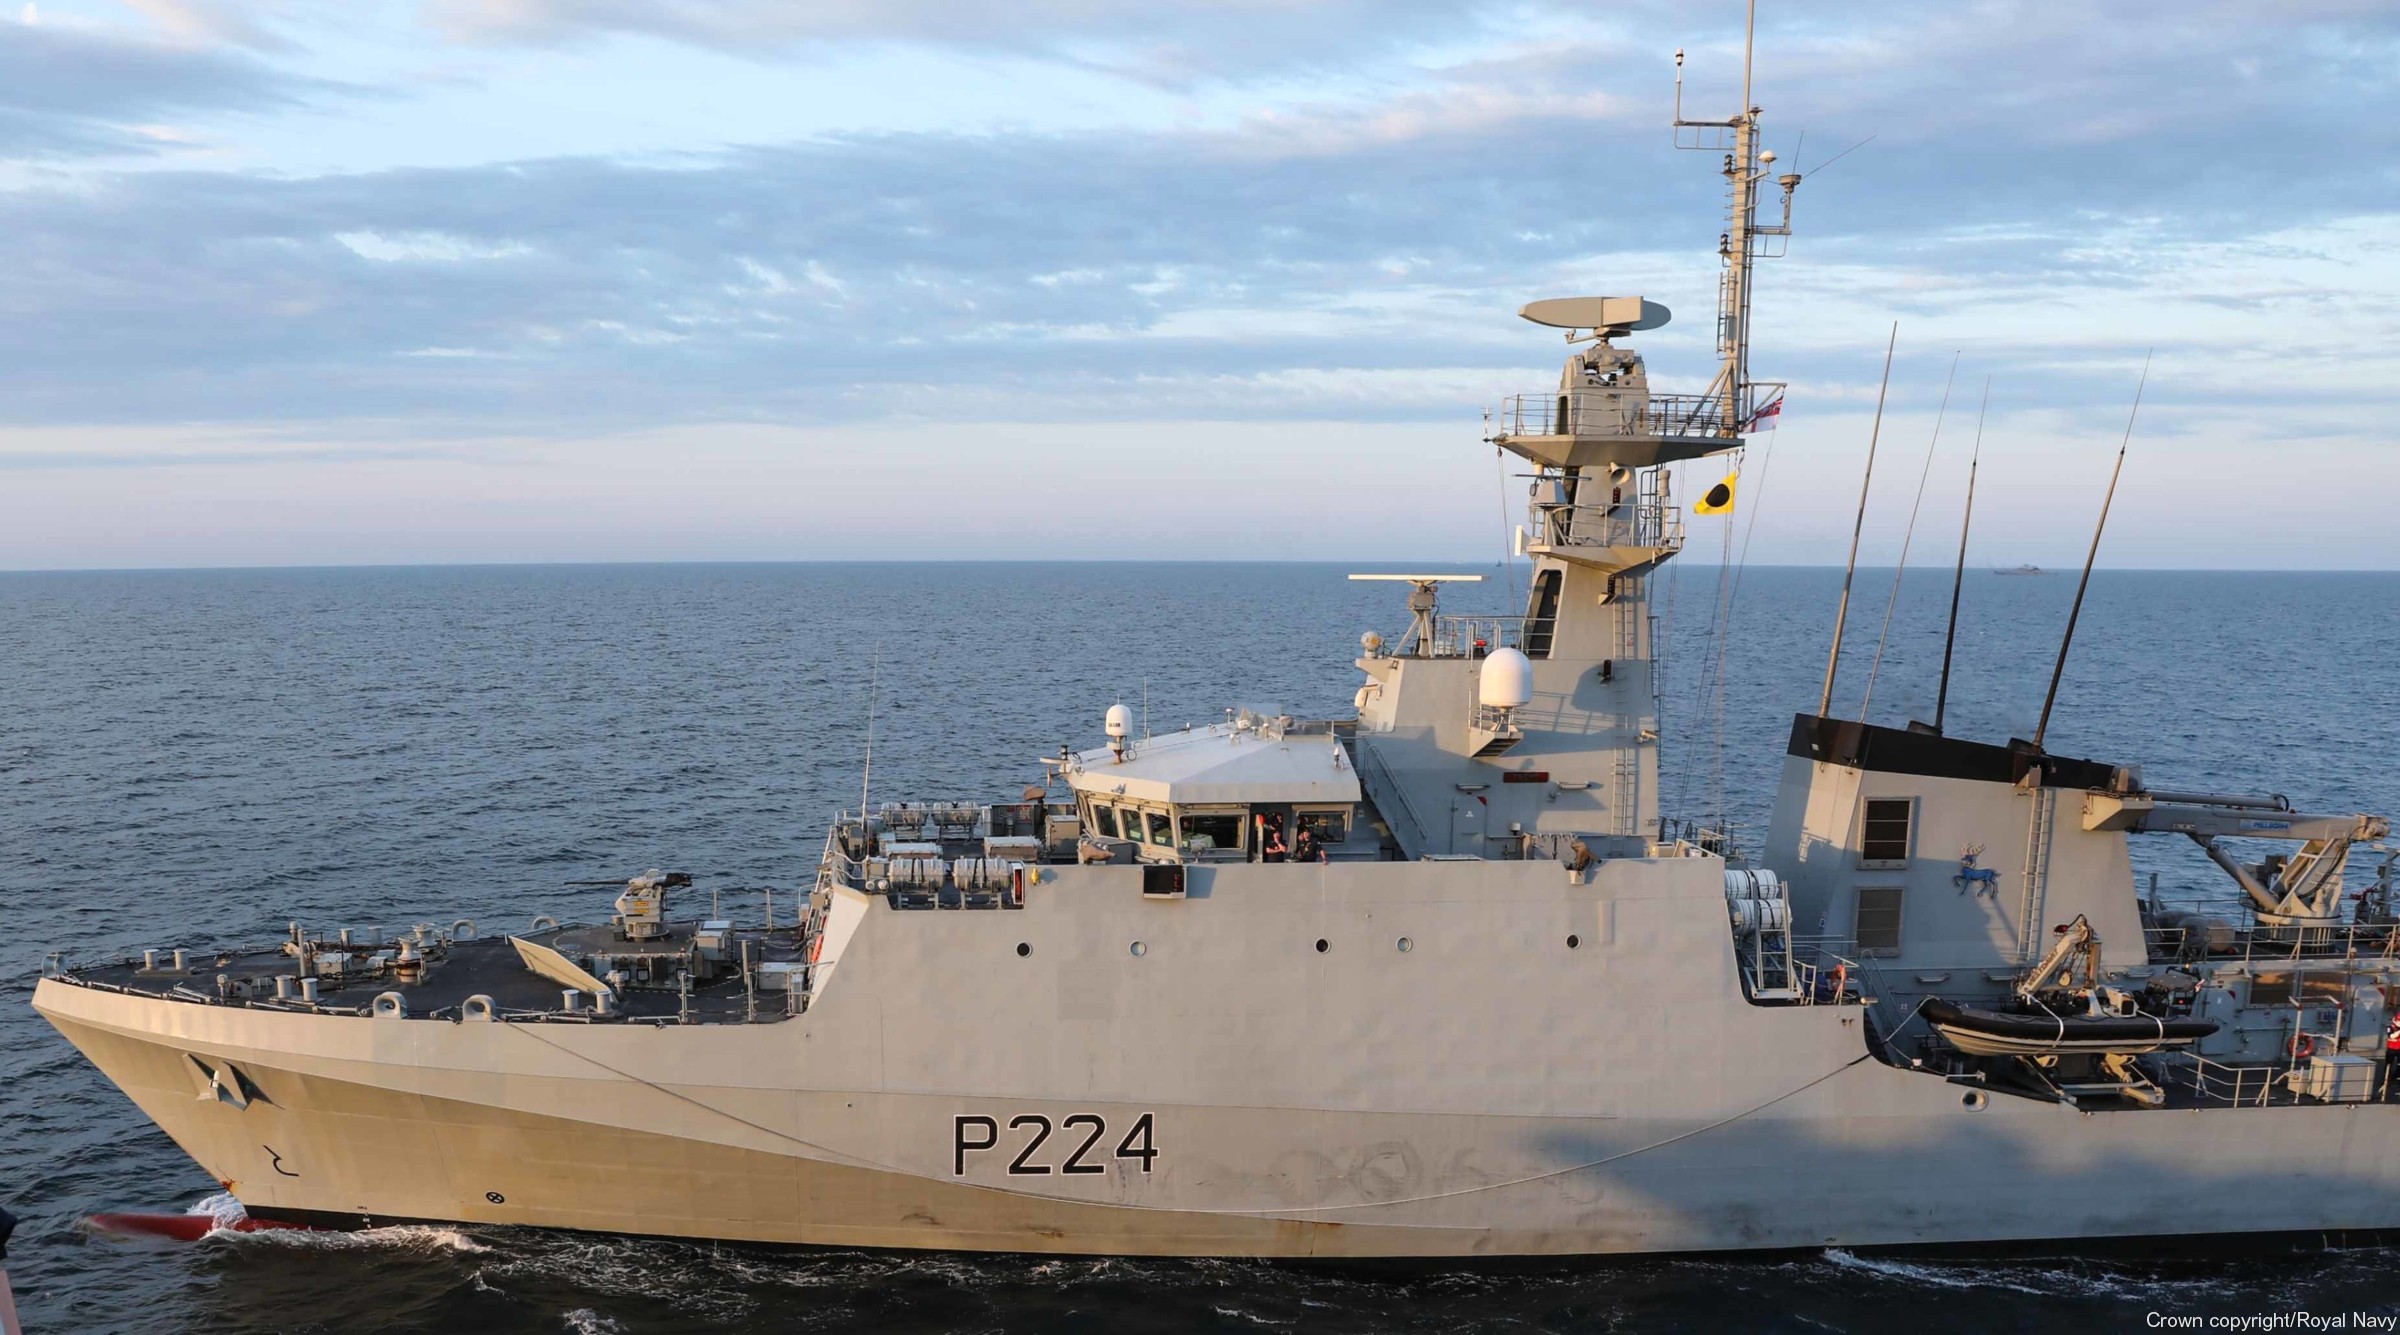 p224 hms trent river class offshore patrol vessel opv royal navy 36